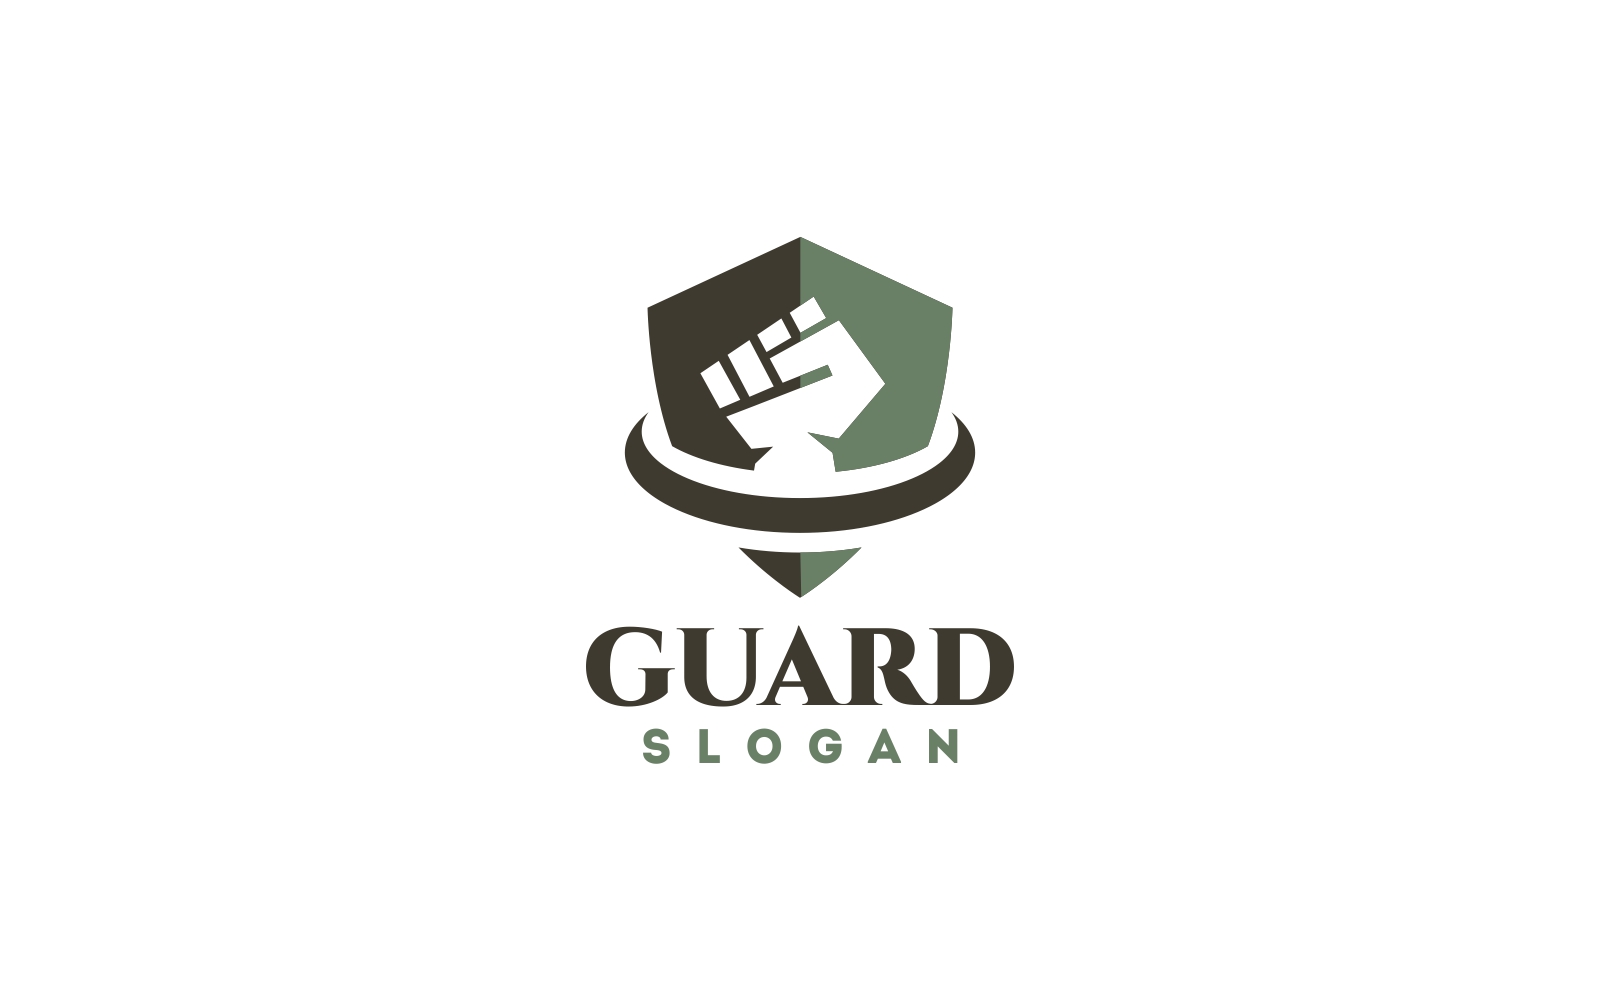 Guard Logo Template